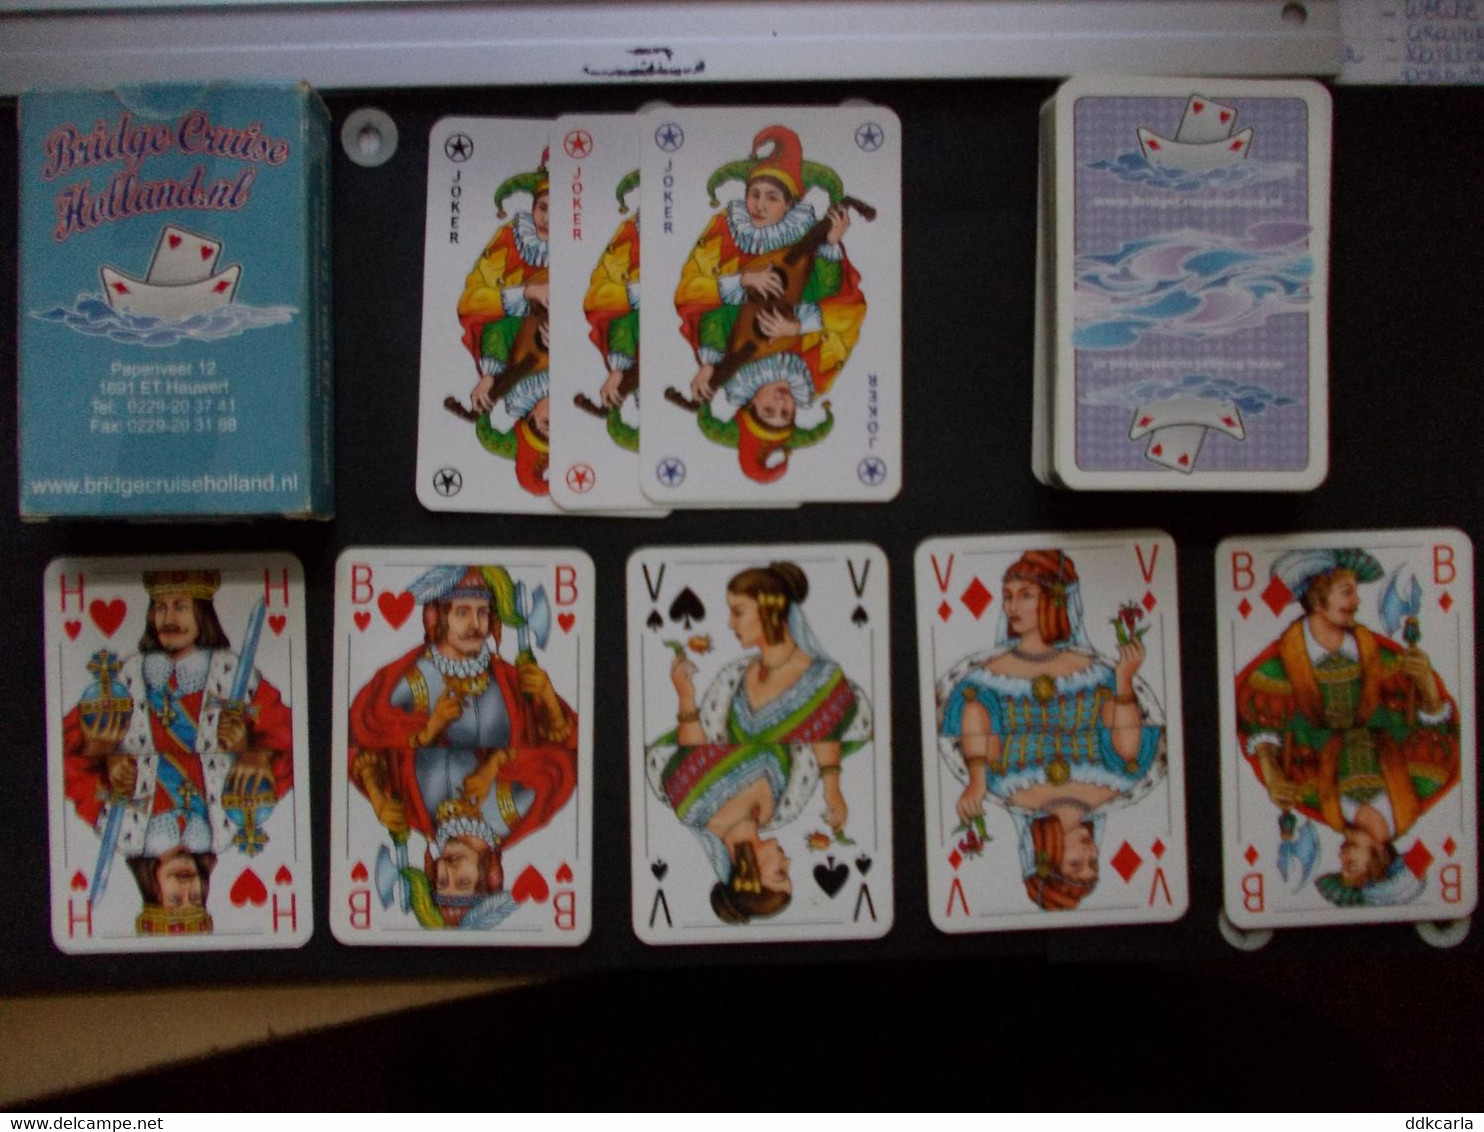 Speelkaarten - Jeu Des Cartes - Bridge Cruise Holland.nl - 52 Kaarten + 3 Jokers - 54 Carte